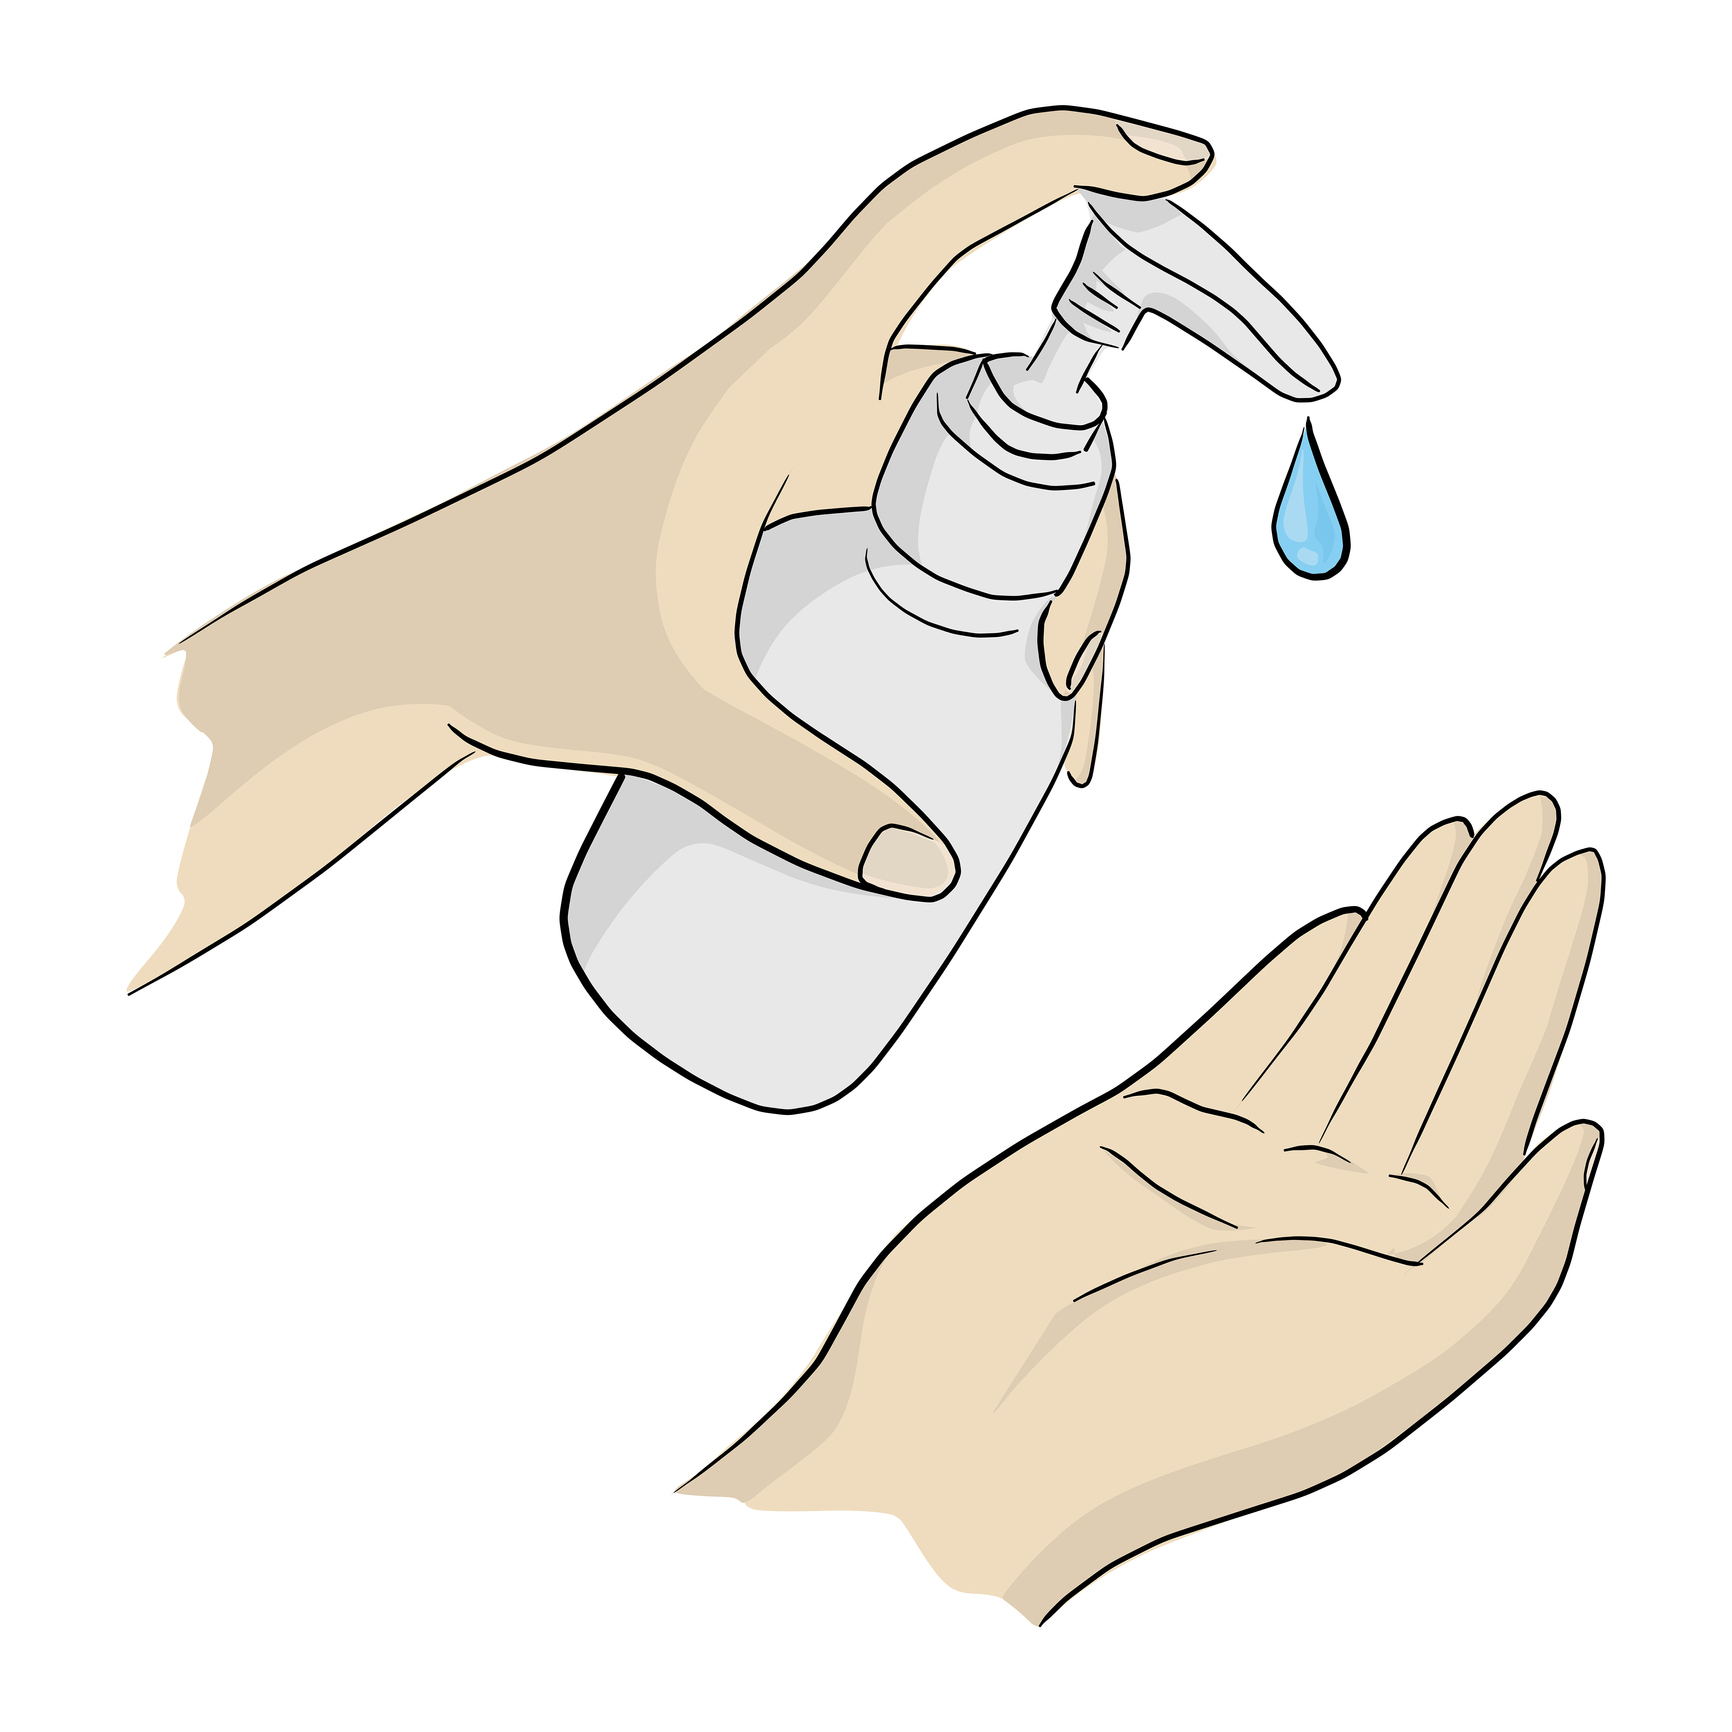 close-up hands using liquid sanitizer gel from pumping bottle dispenser to prevent Covid-19 or coronavirus handdrawn vector illustration